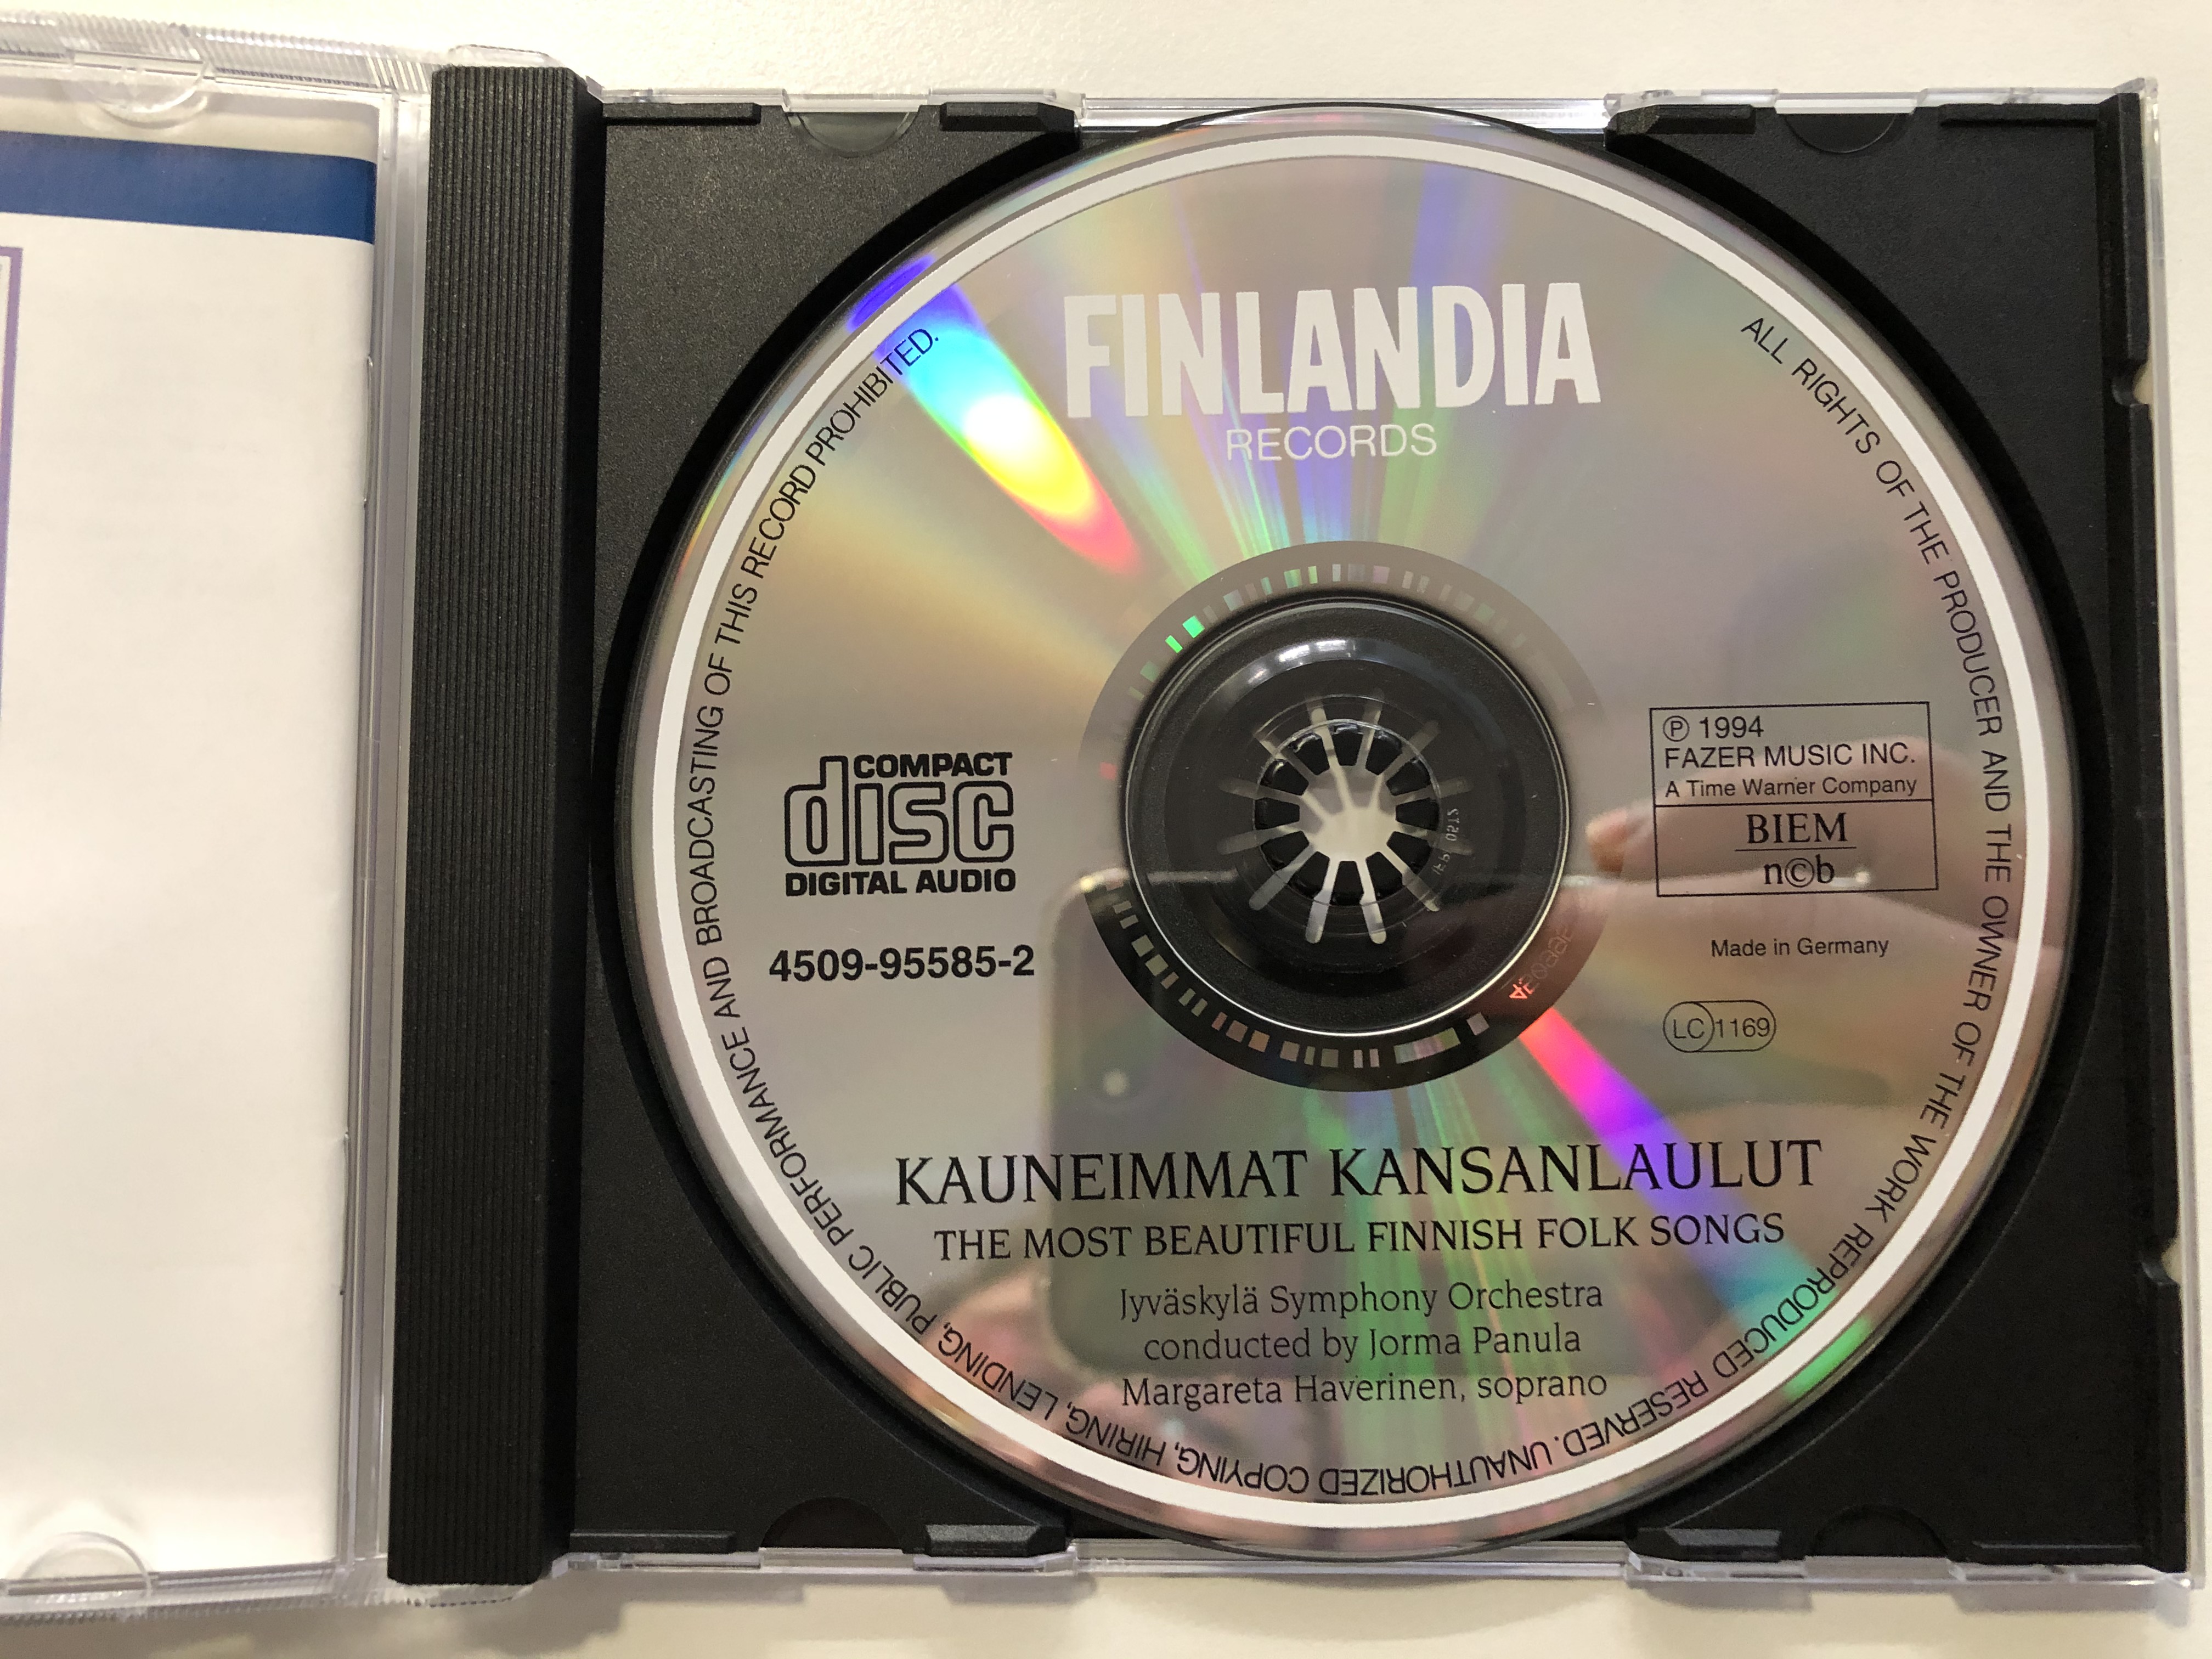 kauneimmat-kansanlaulut-the-most-beautiful-finnish-folk-songs-margareta-haverinen-soprano-jyv-skyl-symphony-orchestra-jorma-panula-finlandia-records-audio-cd-1994-stereo-4509-955-3-.jpg